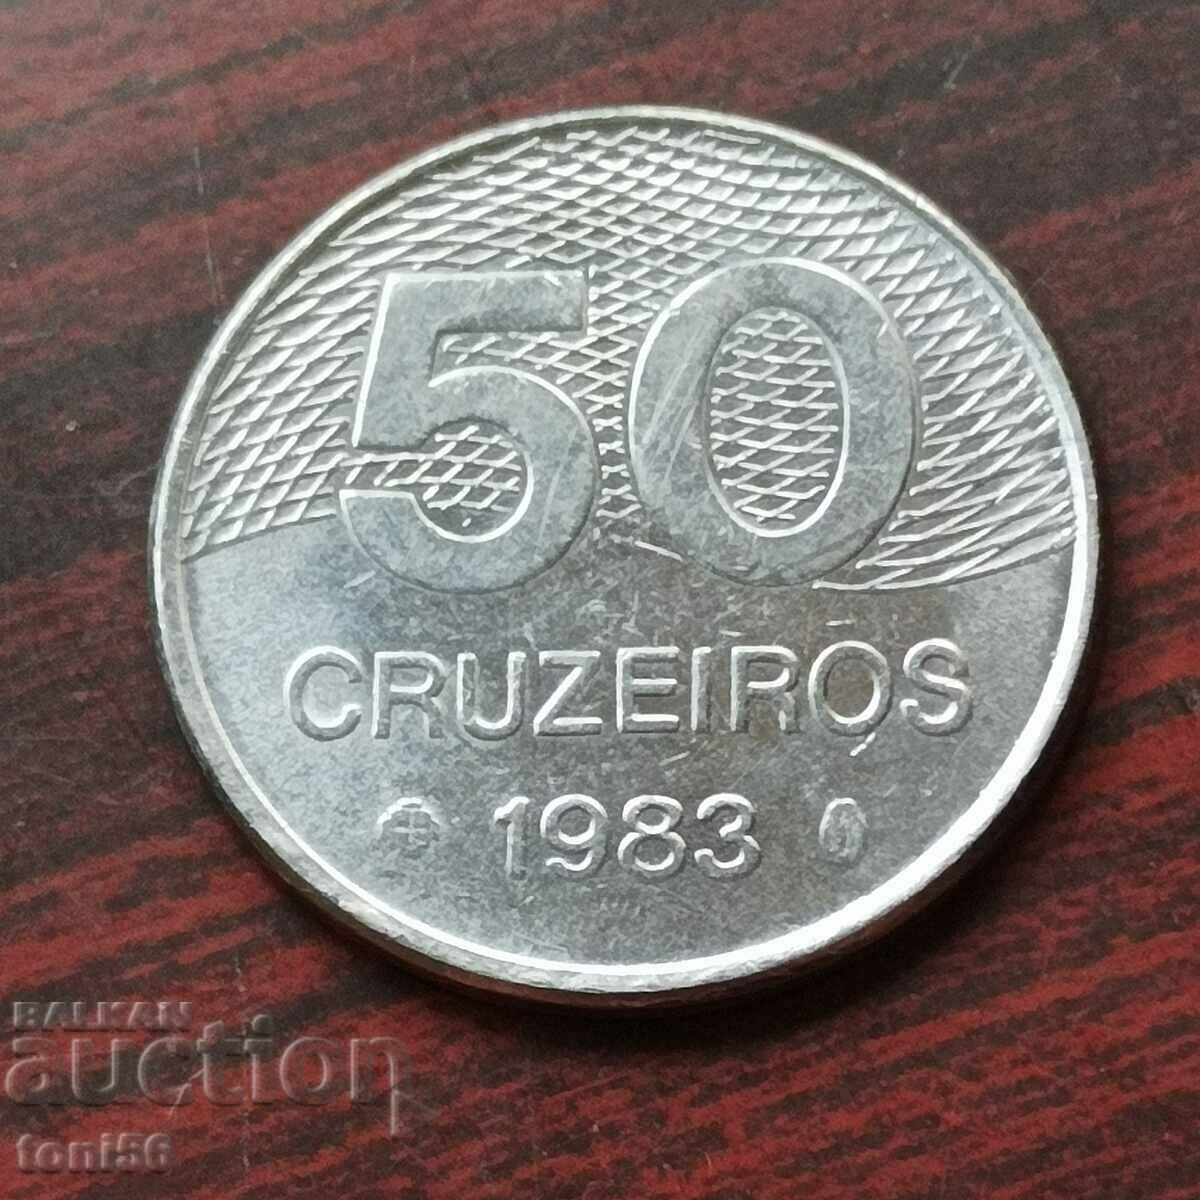 Brazil 50 cruzeiros 1983 aUNC